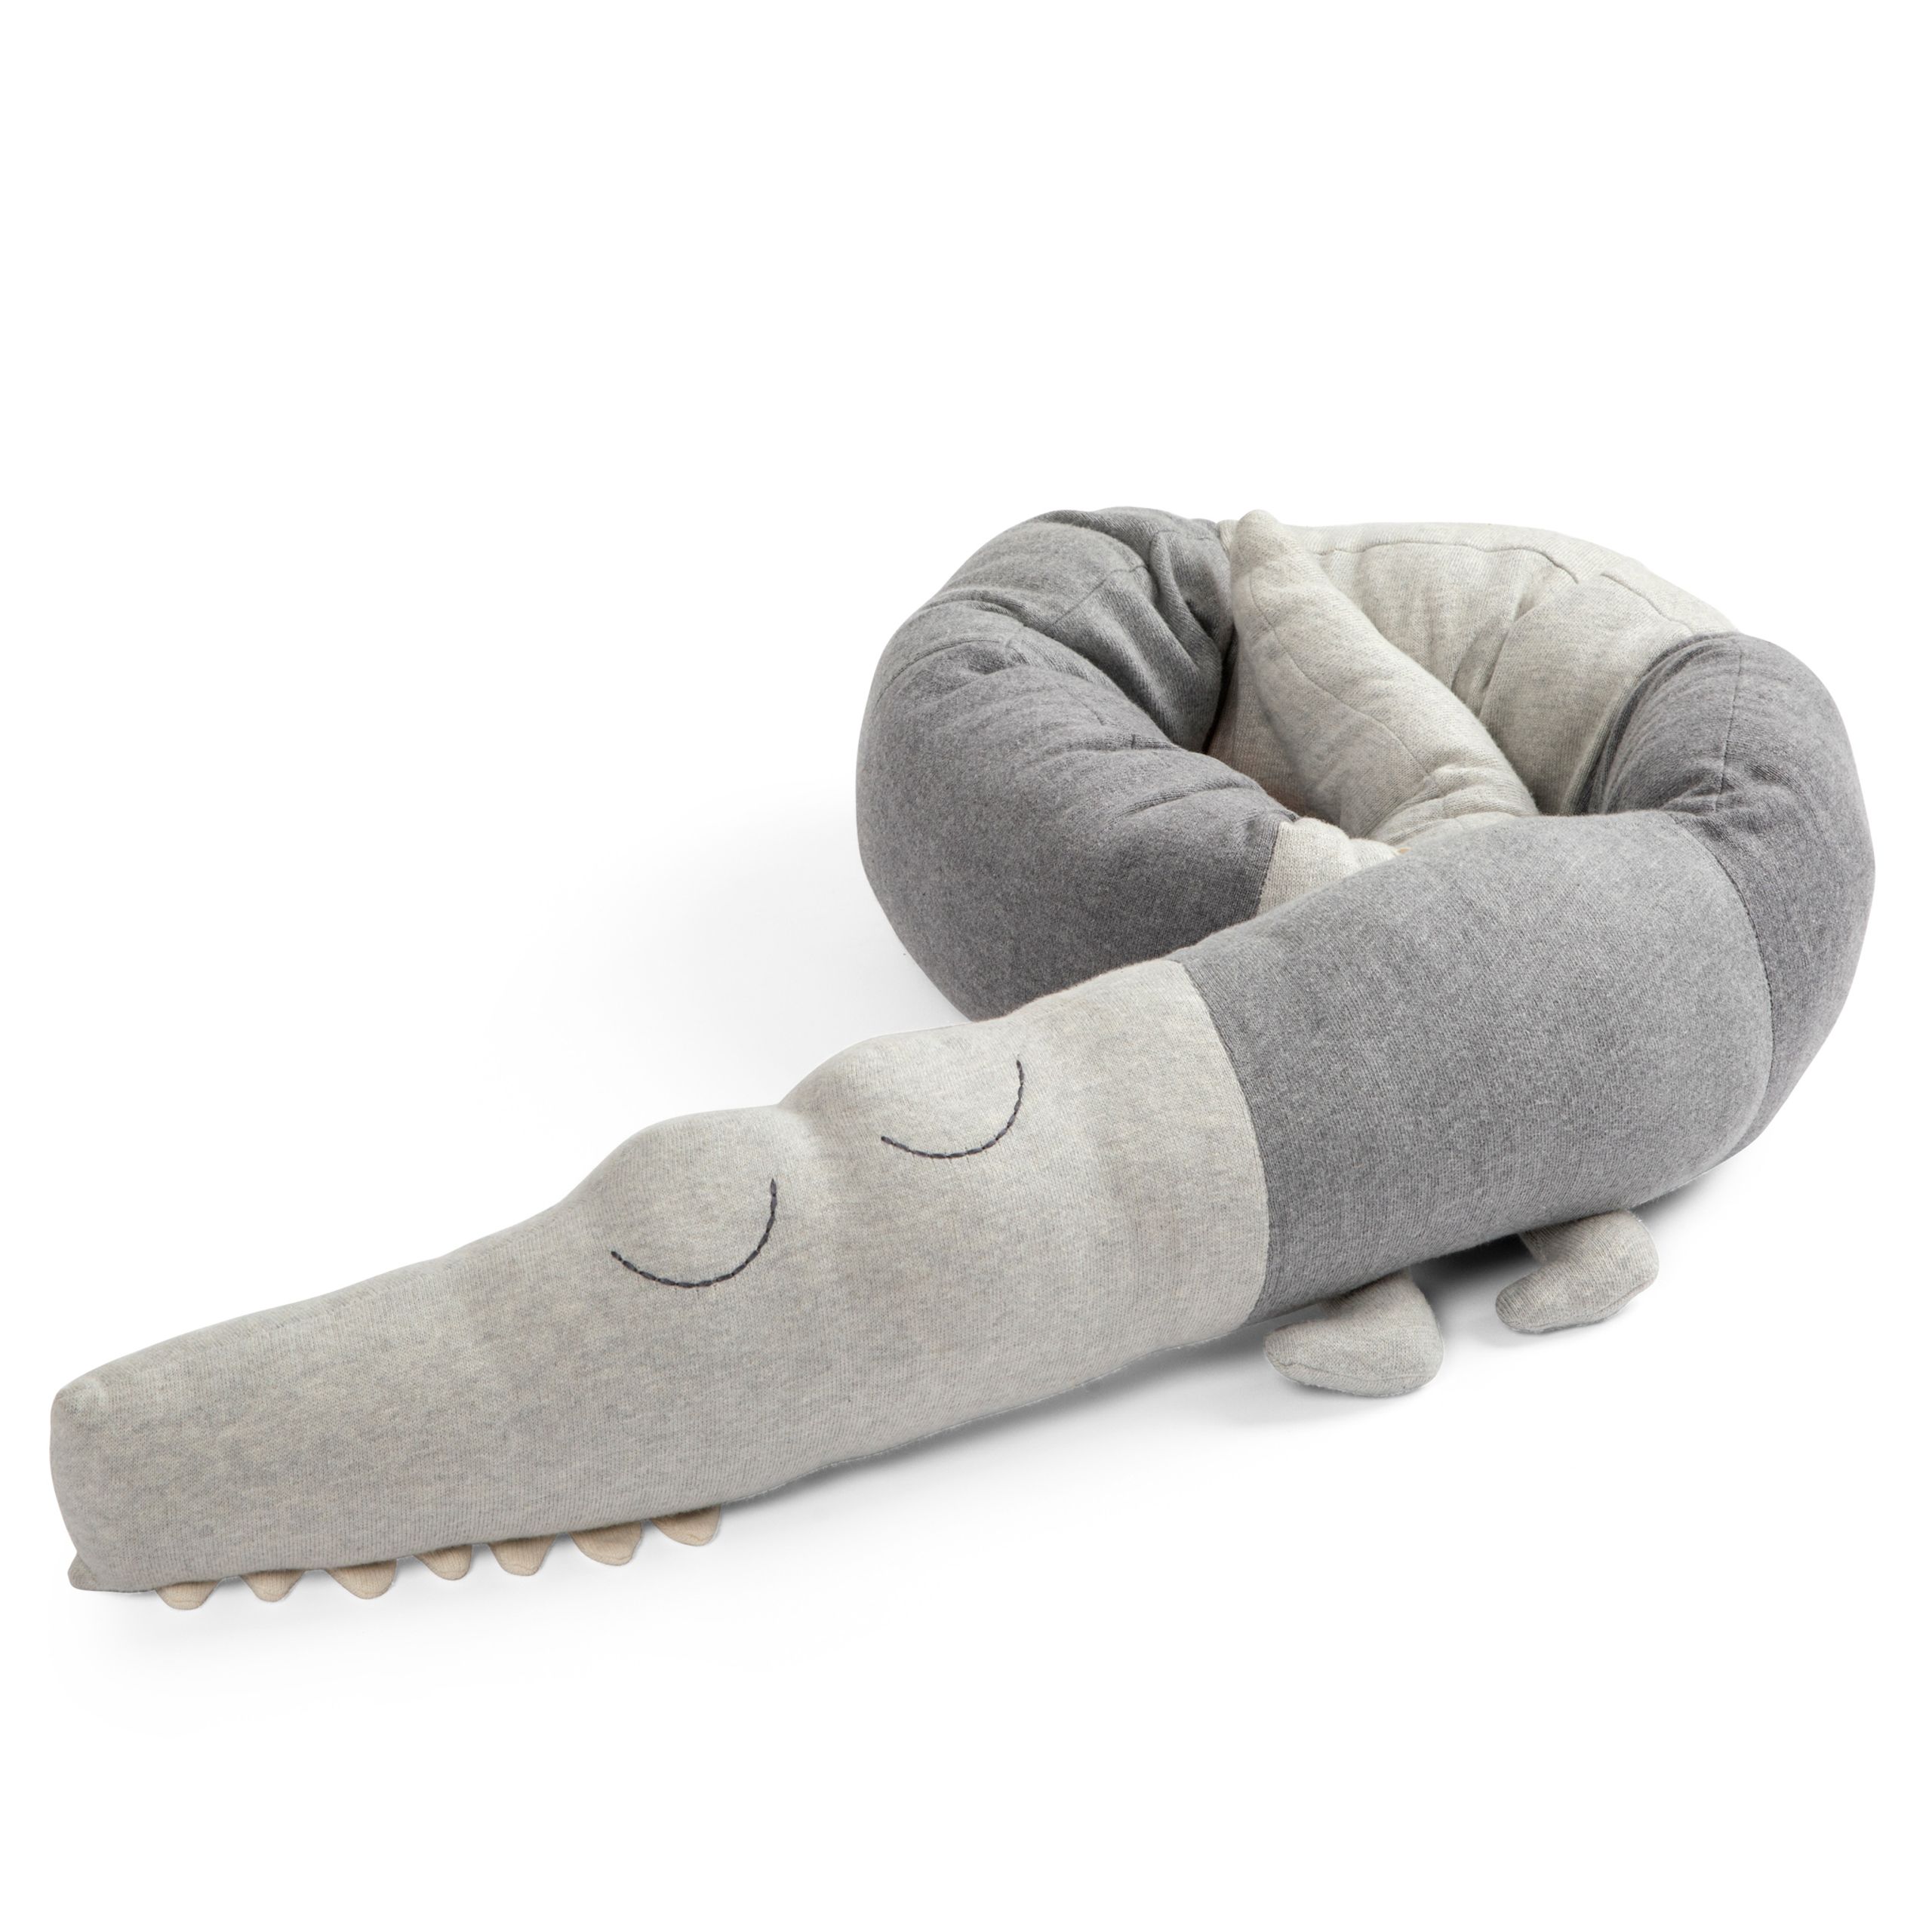 Sebra - Kopfkissen für Kinder - Strikket Pude, Sleepy Croc - Elephant Grey